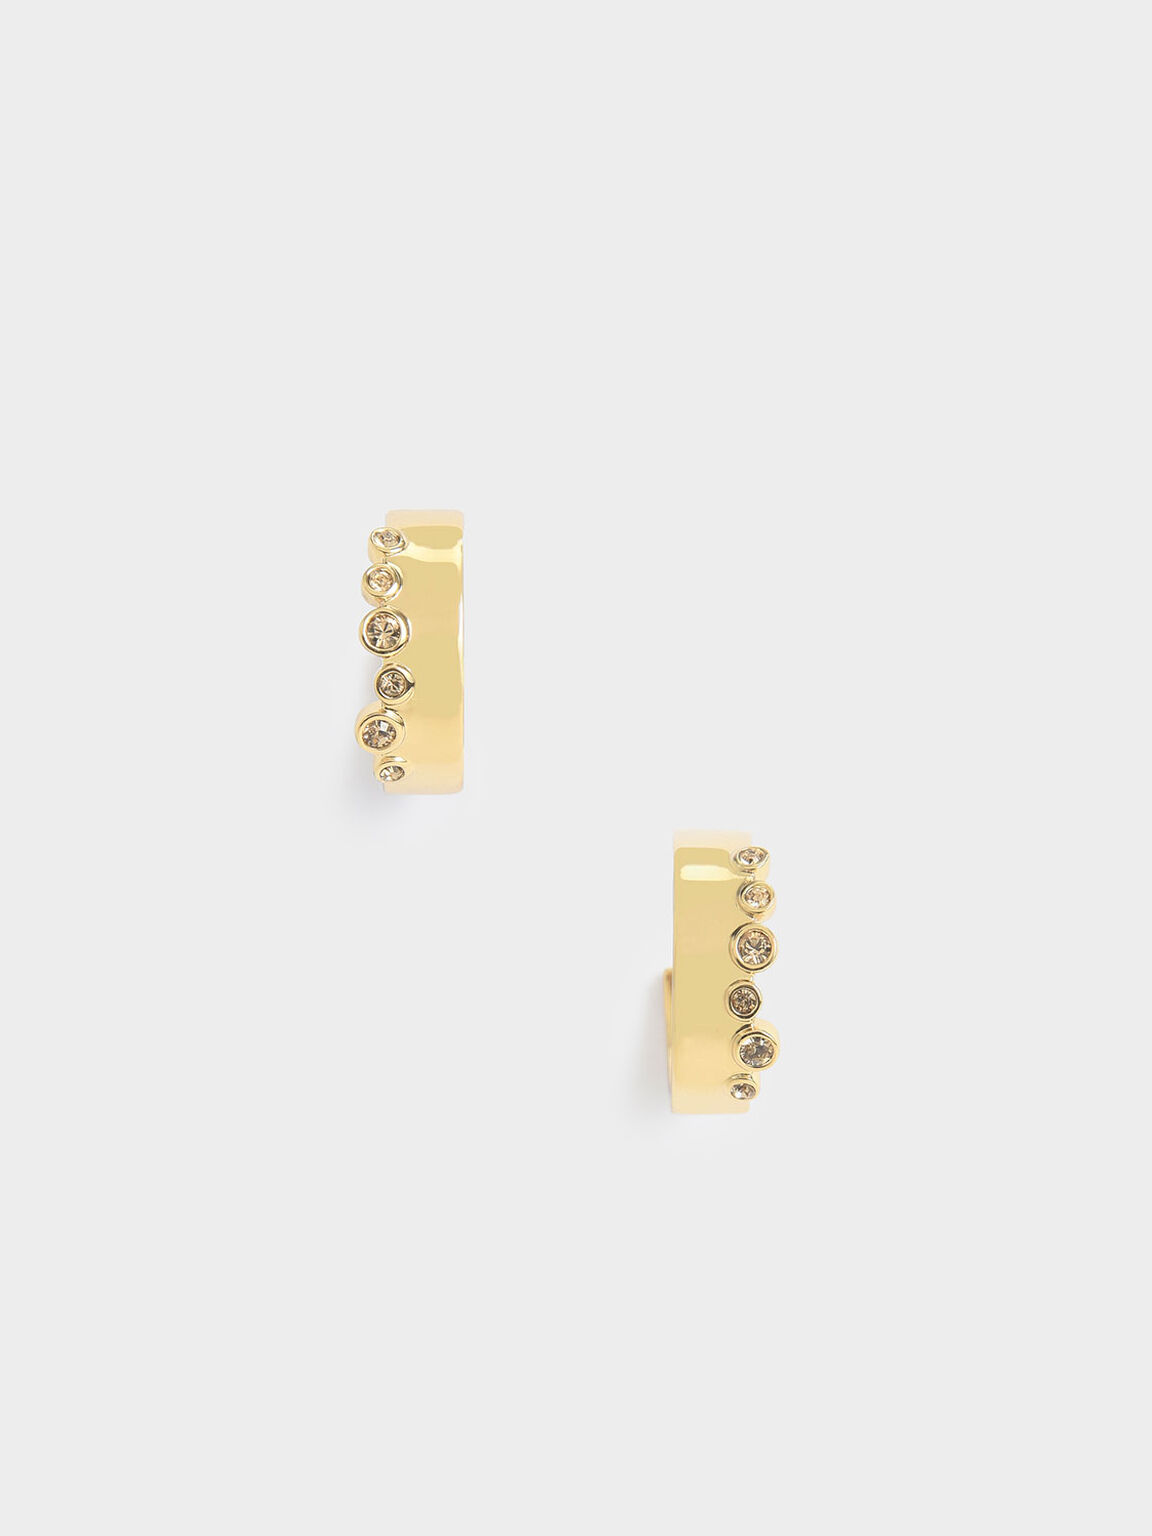 施華洛世奇®水晶鑲嵌耳環, 金色, hi-res